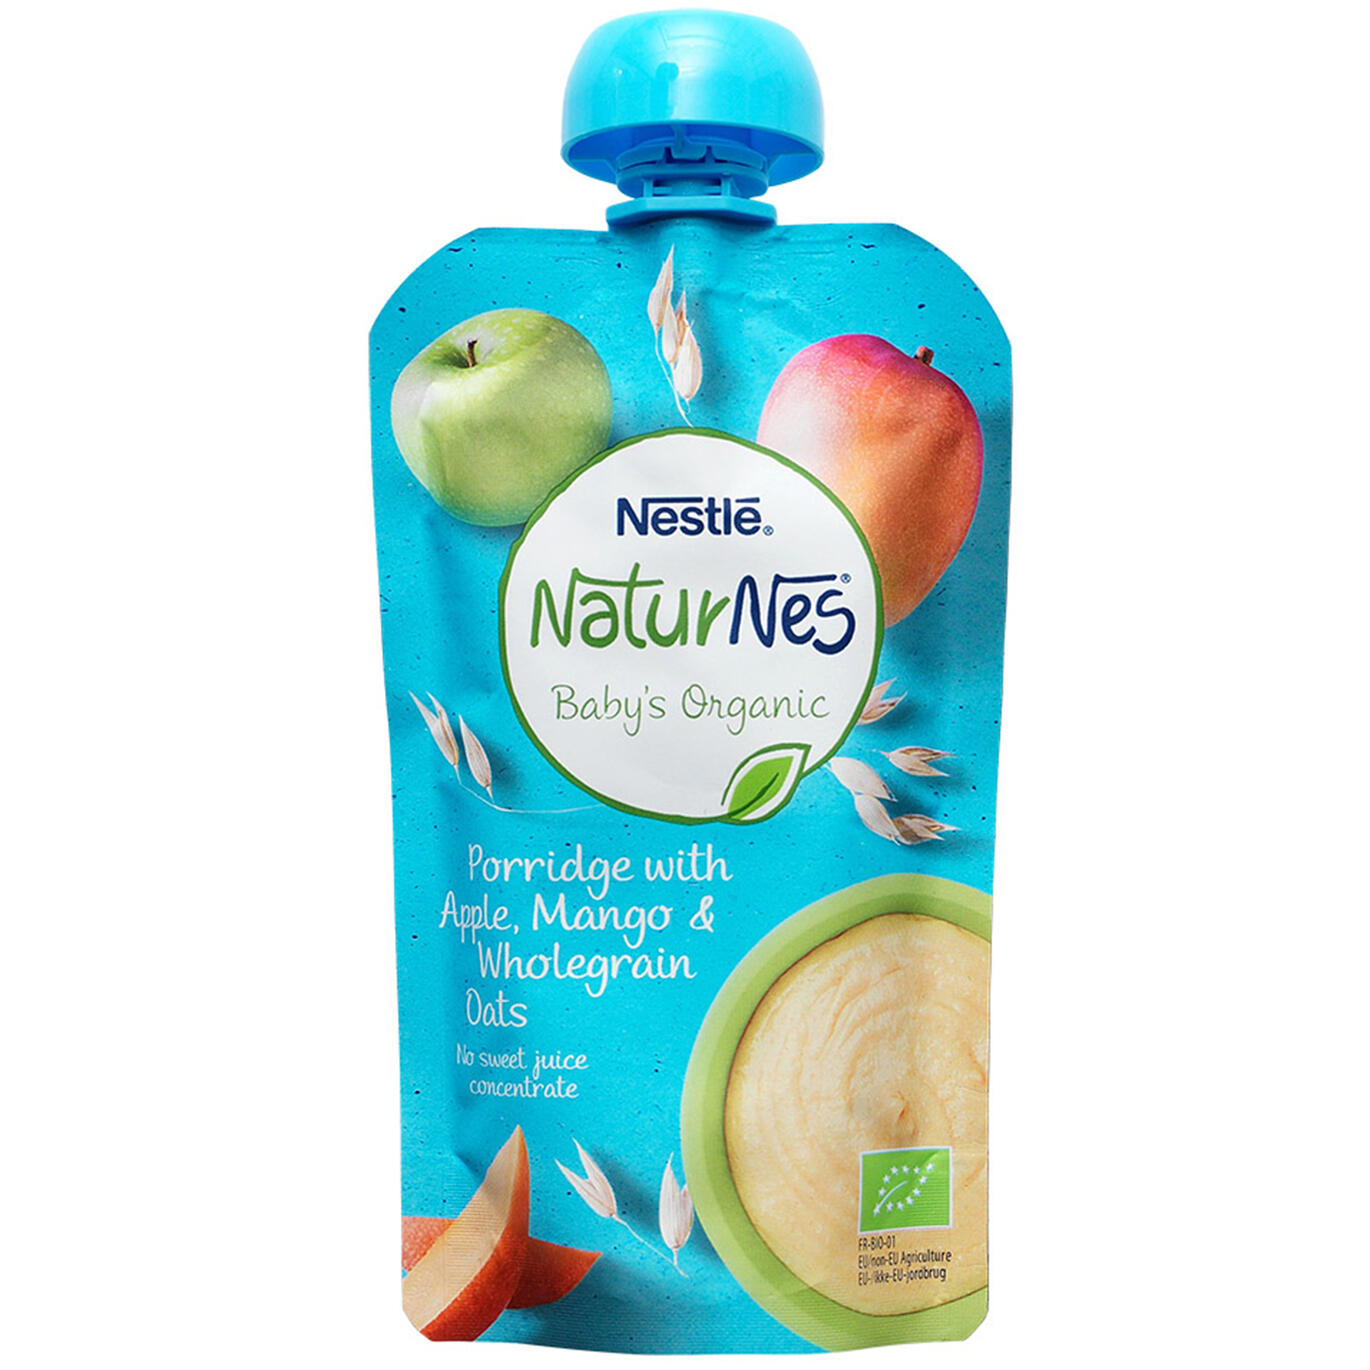 Porridge with Apple, Mango & wholegrain oats Nestlé NaturNes Baby's Organic